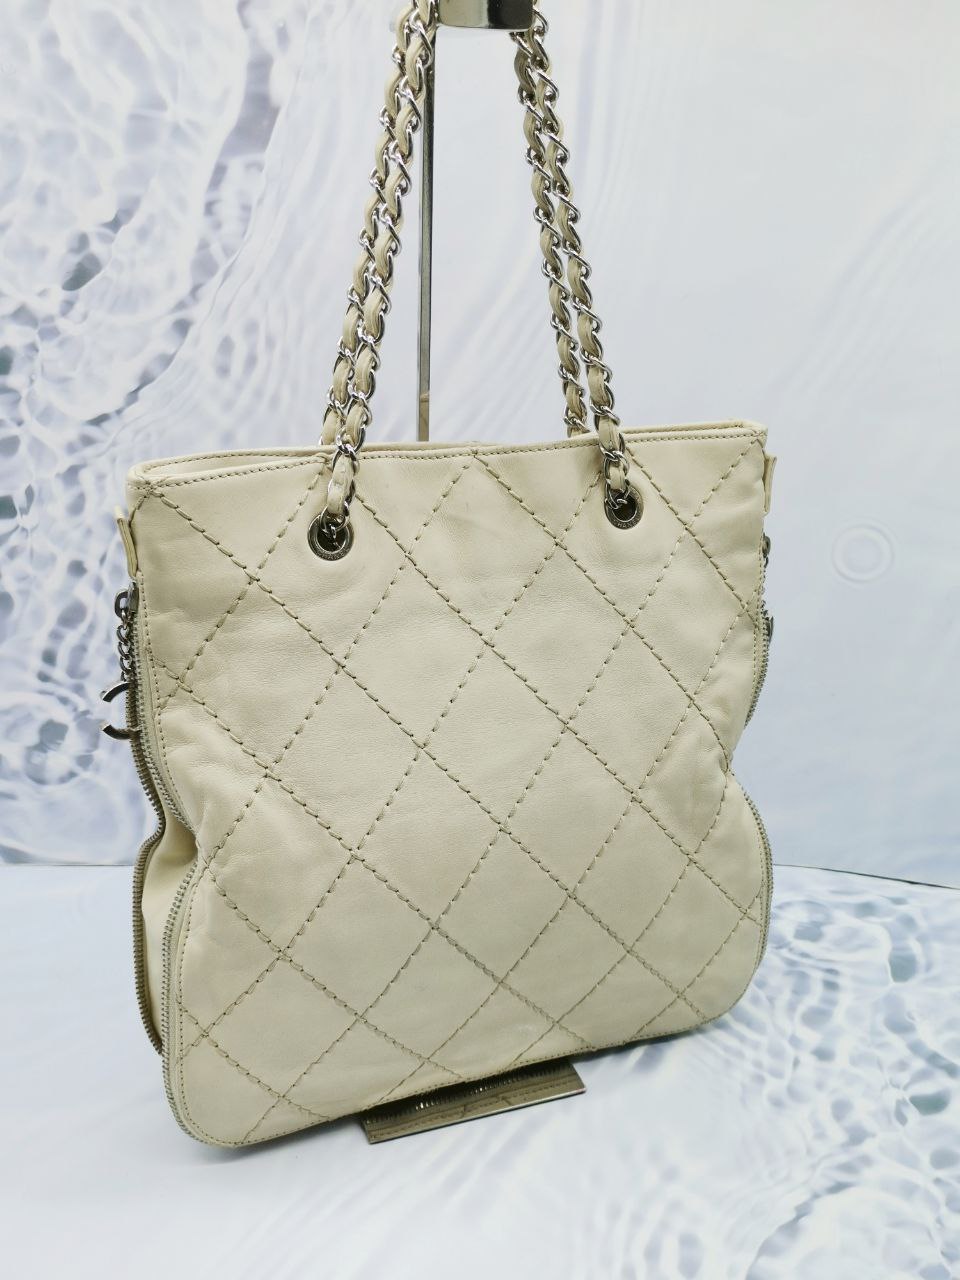 Chanel Silver Chain Shoulder Bag